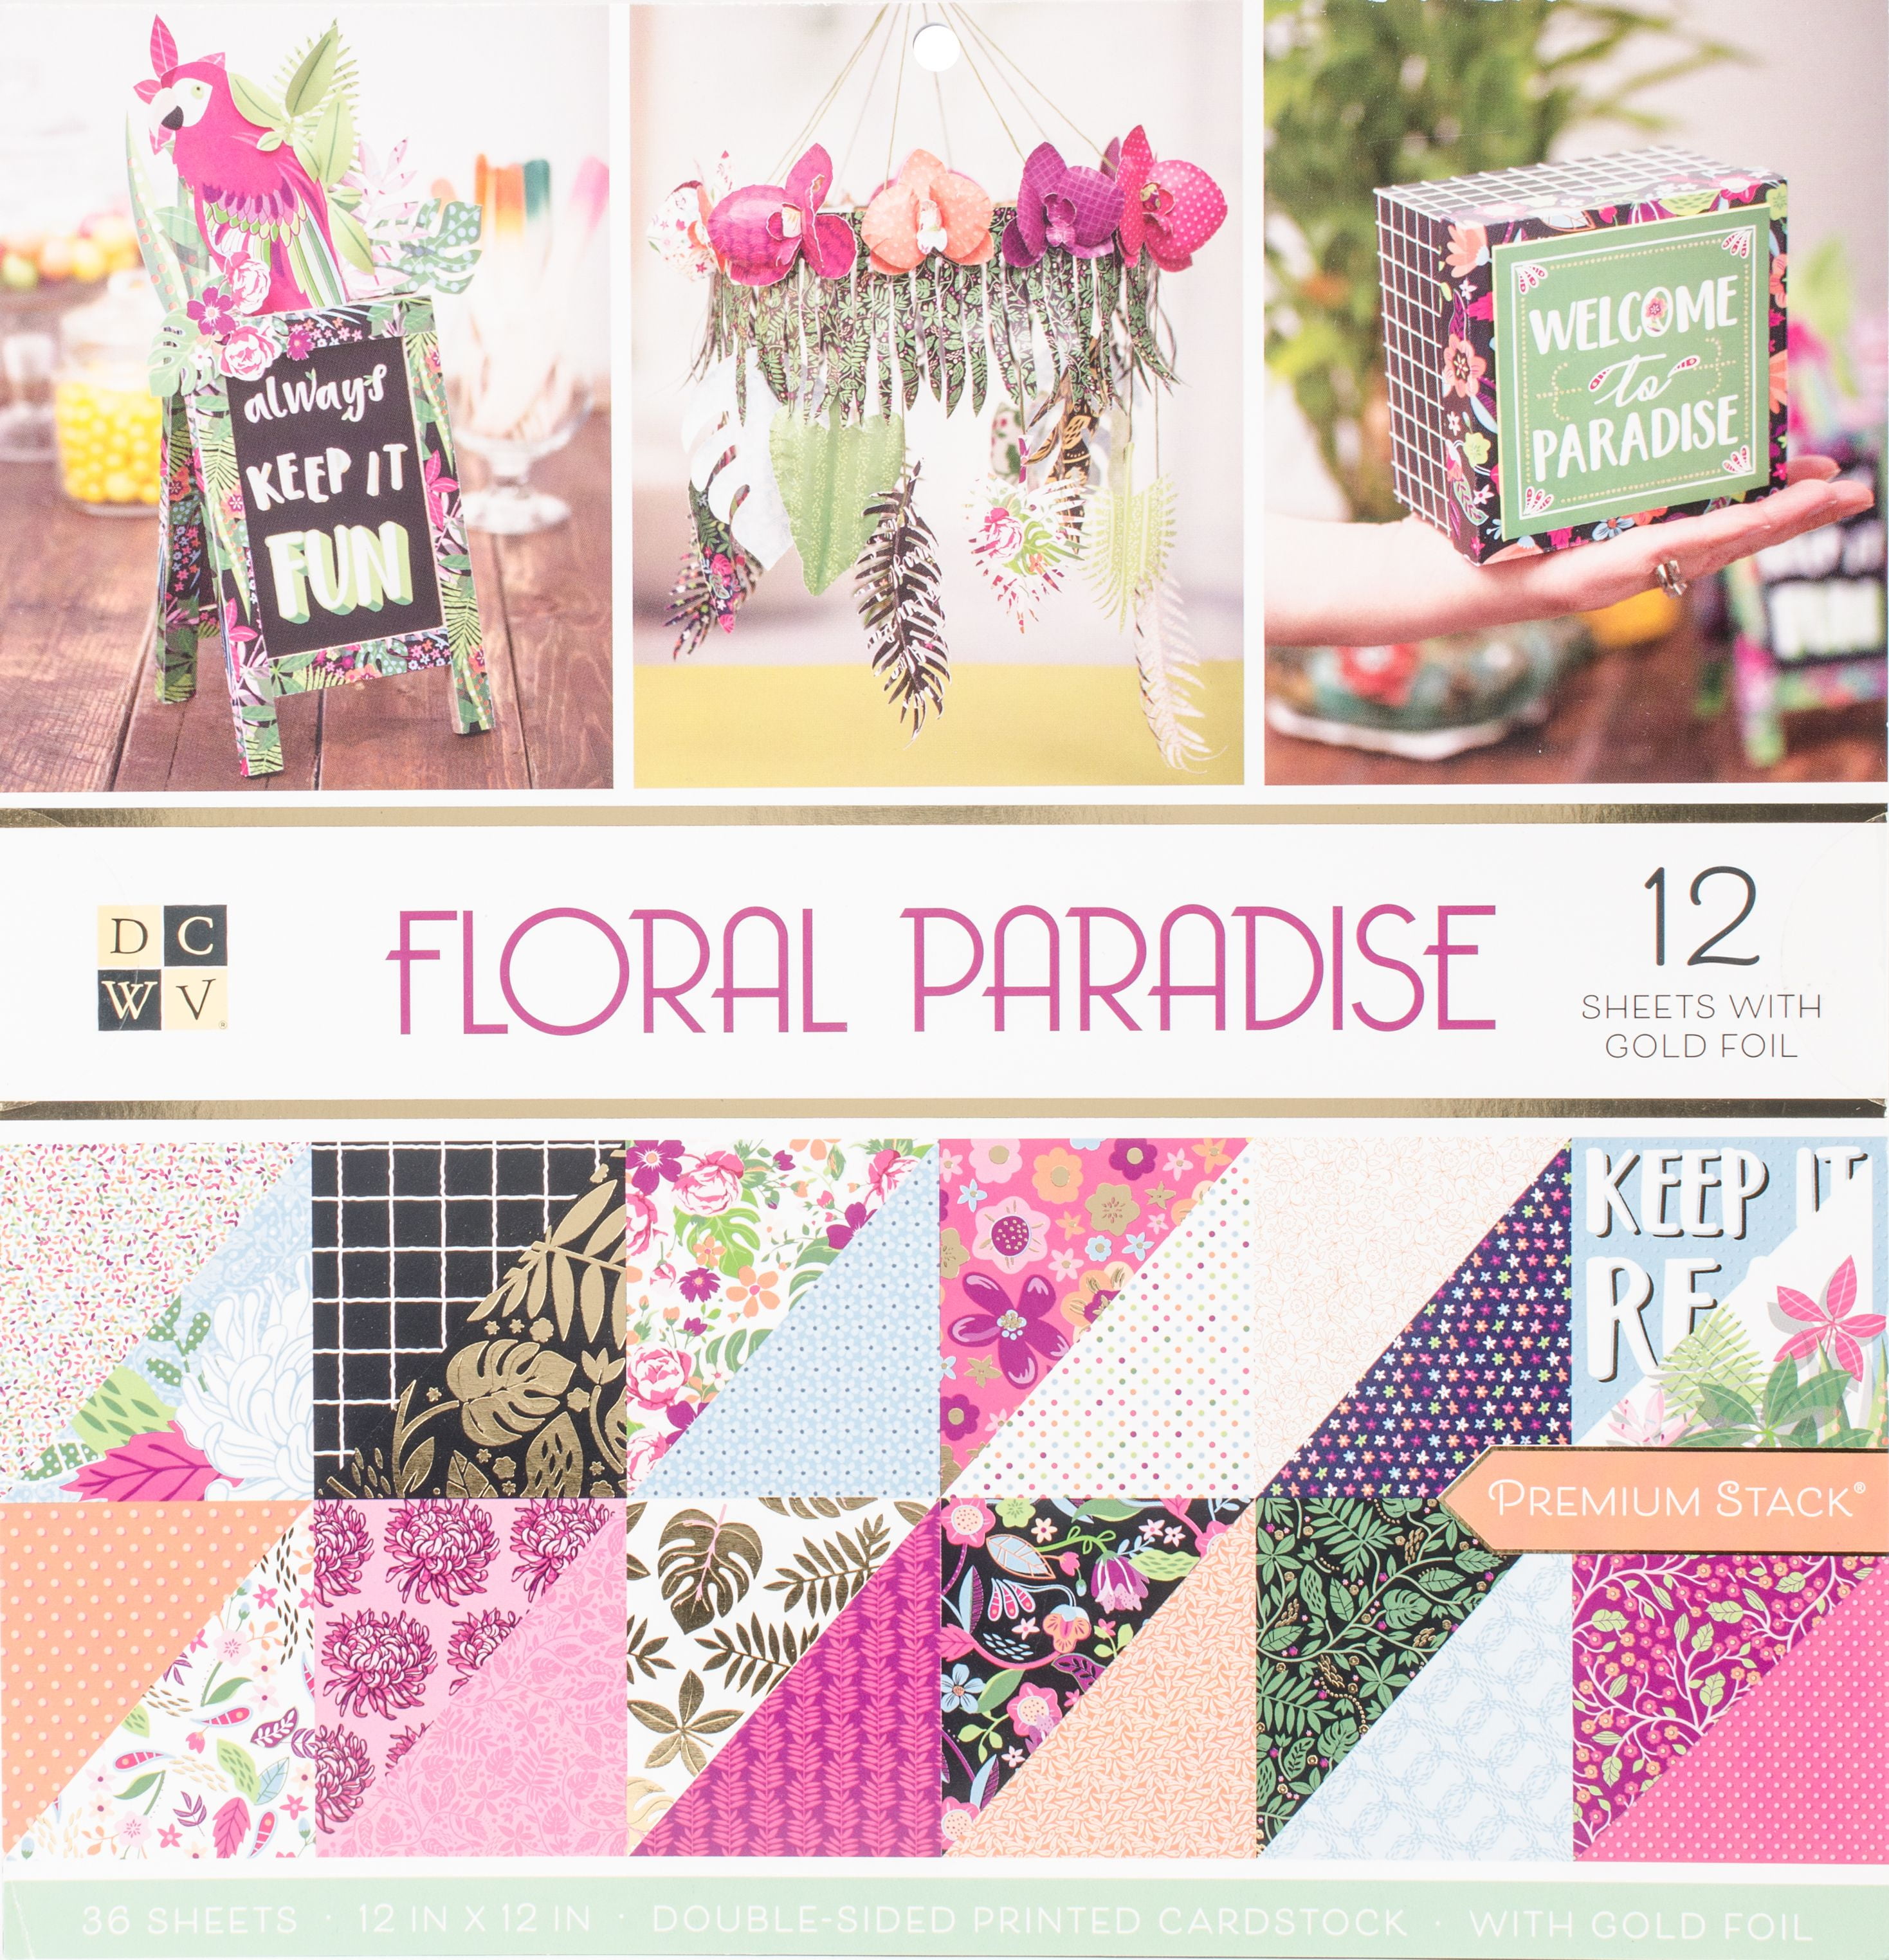 DCWV Card Stock 12X12 Floral Paradise Premium Printed Cardstock Stack